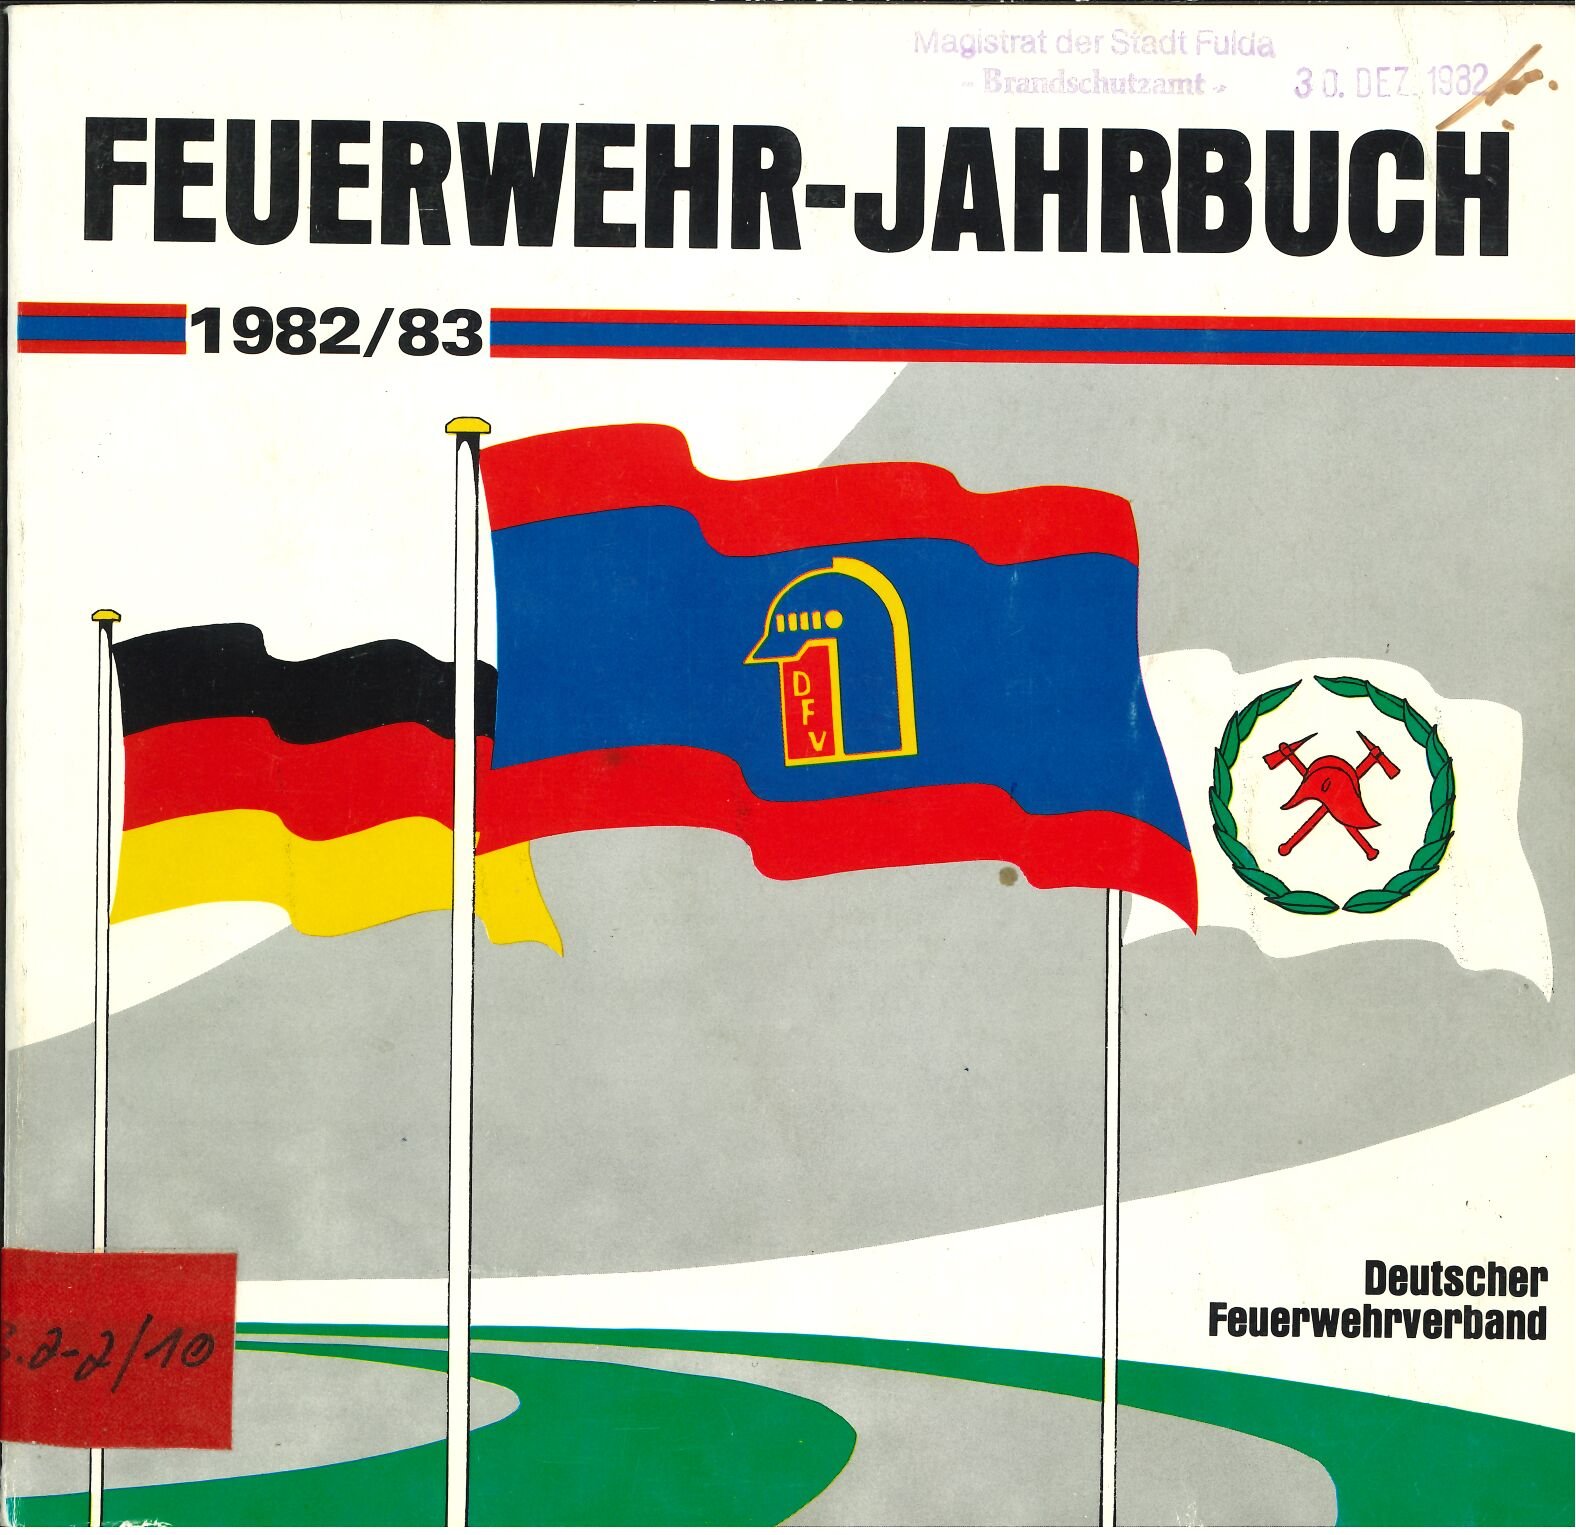 Feuerwehr-Jahrbuch 1982/83 (Feuerwehrmuseum Grethen CC BY-NC-SA)